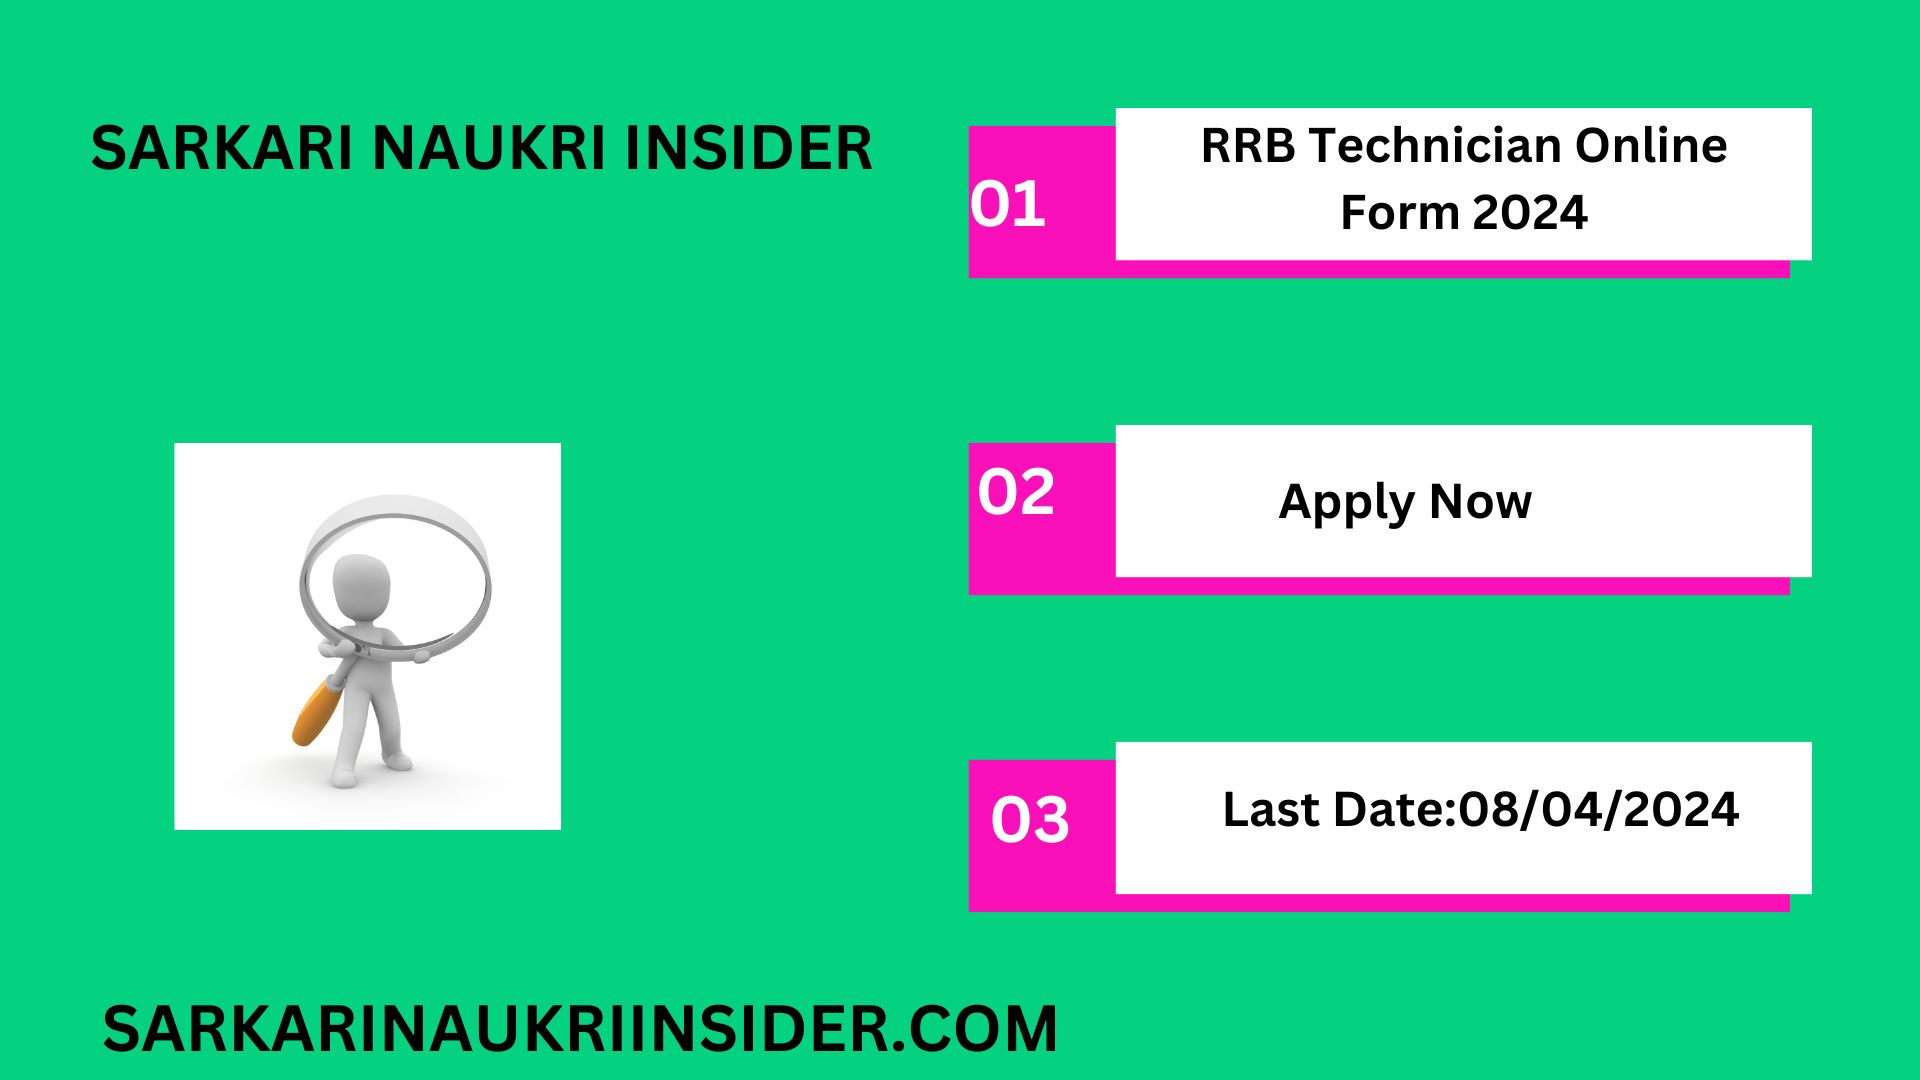 RRB Technician Online Form 2024